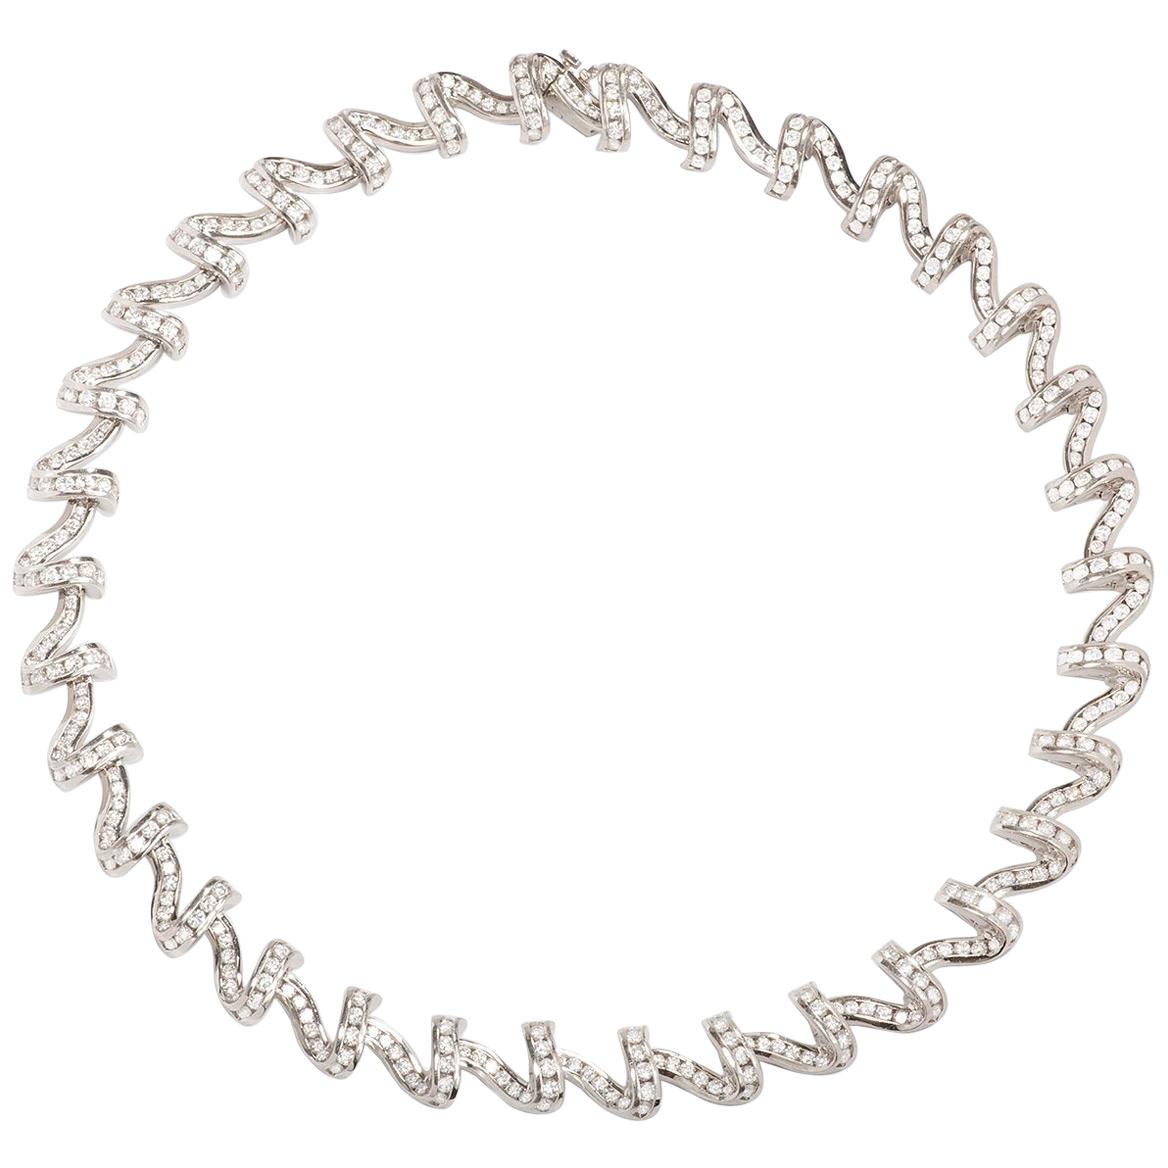 Krypell "Apple Peel" 18.50 Carat Diamond Necklace in Platinum